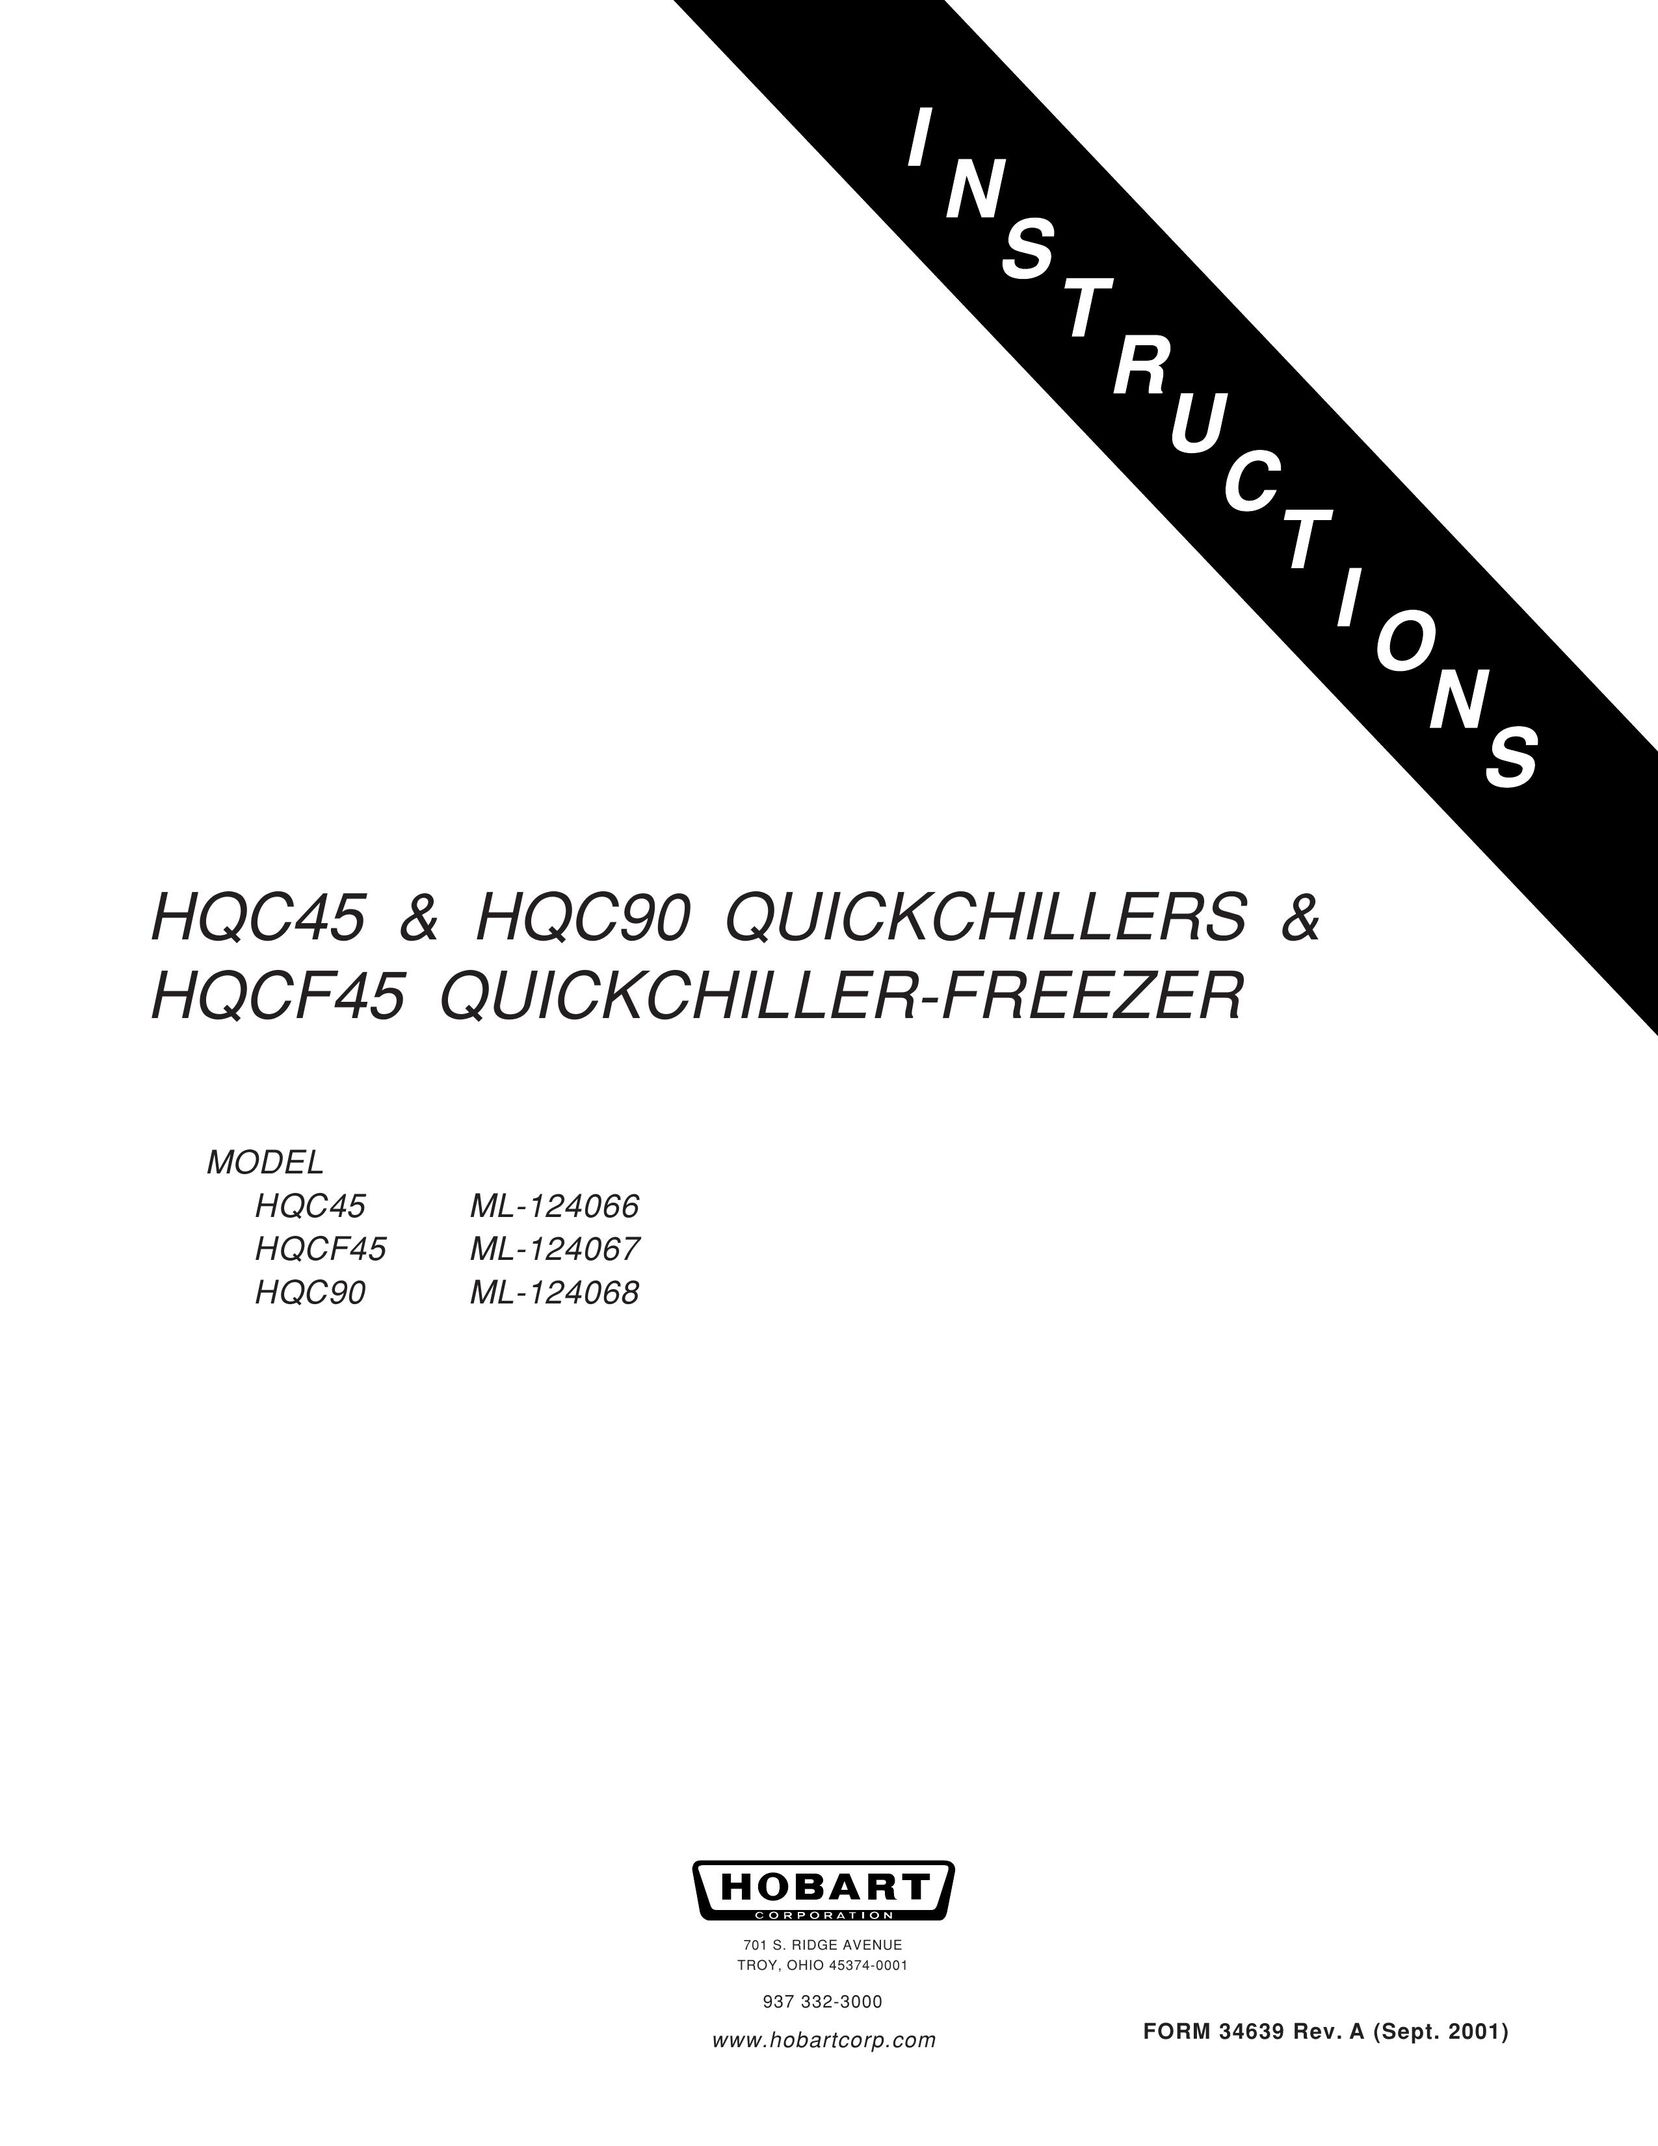 Hobart ML-124067 Freezer User Manual